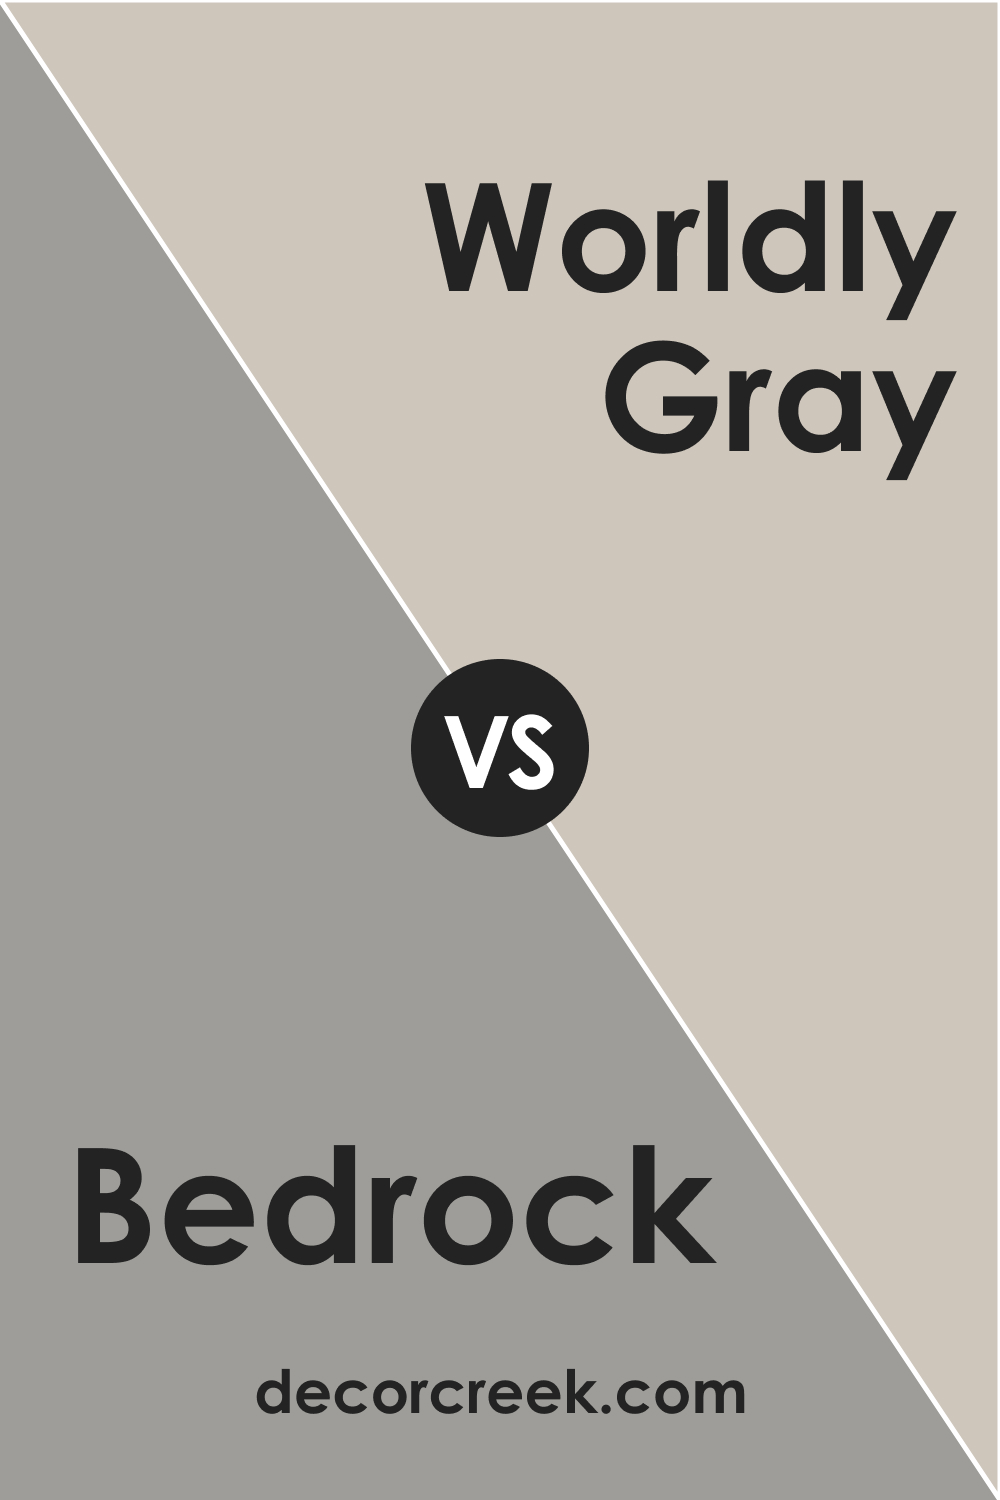 SW 9563 Bedrock vs. SW 7043 Worldly Gray